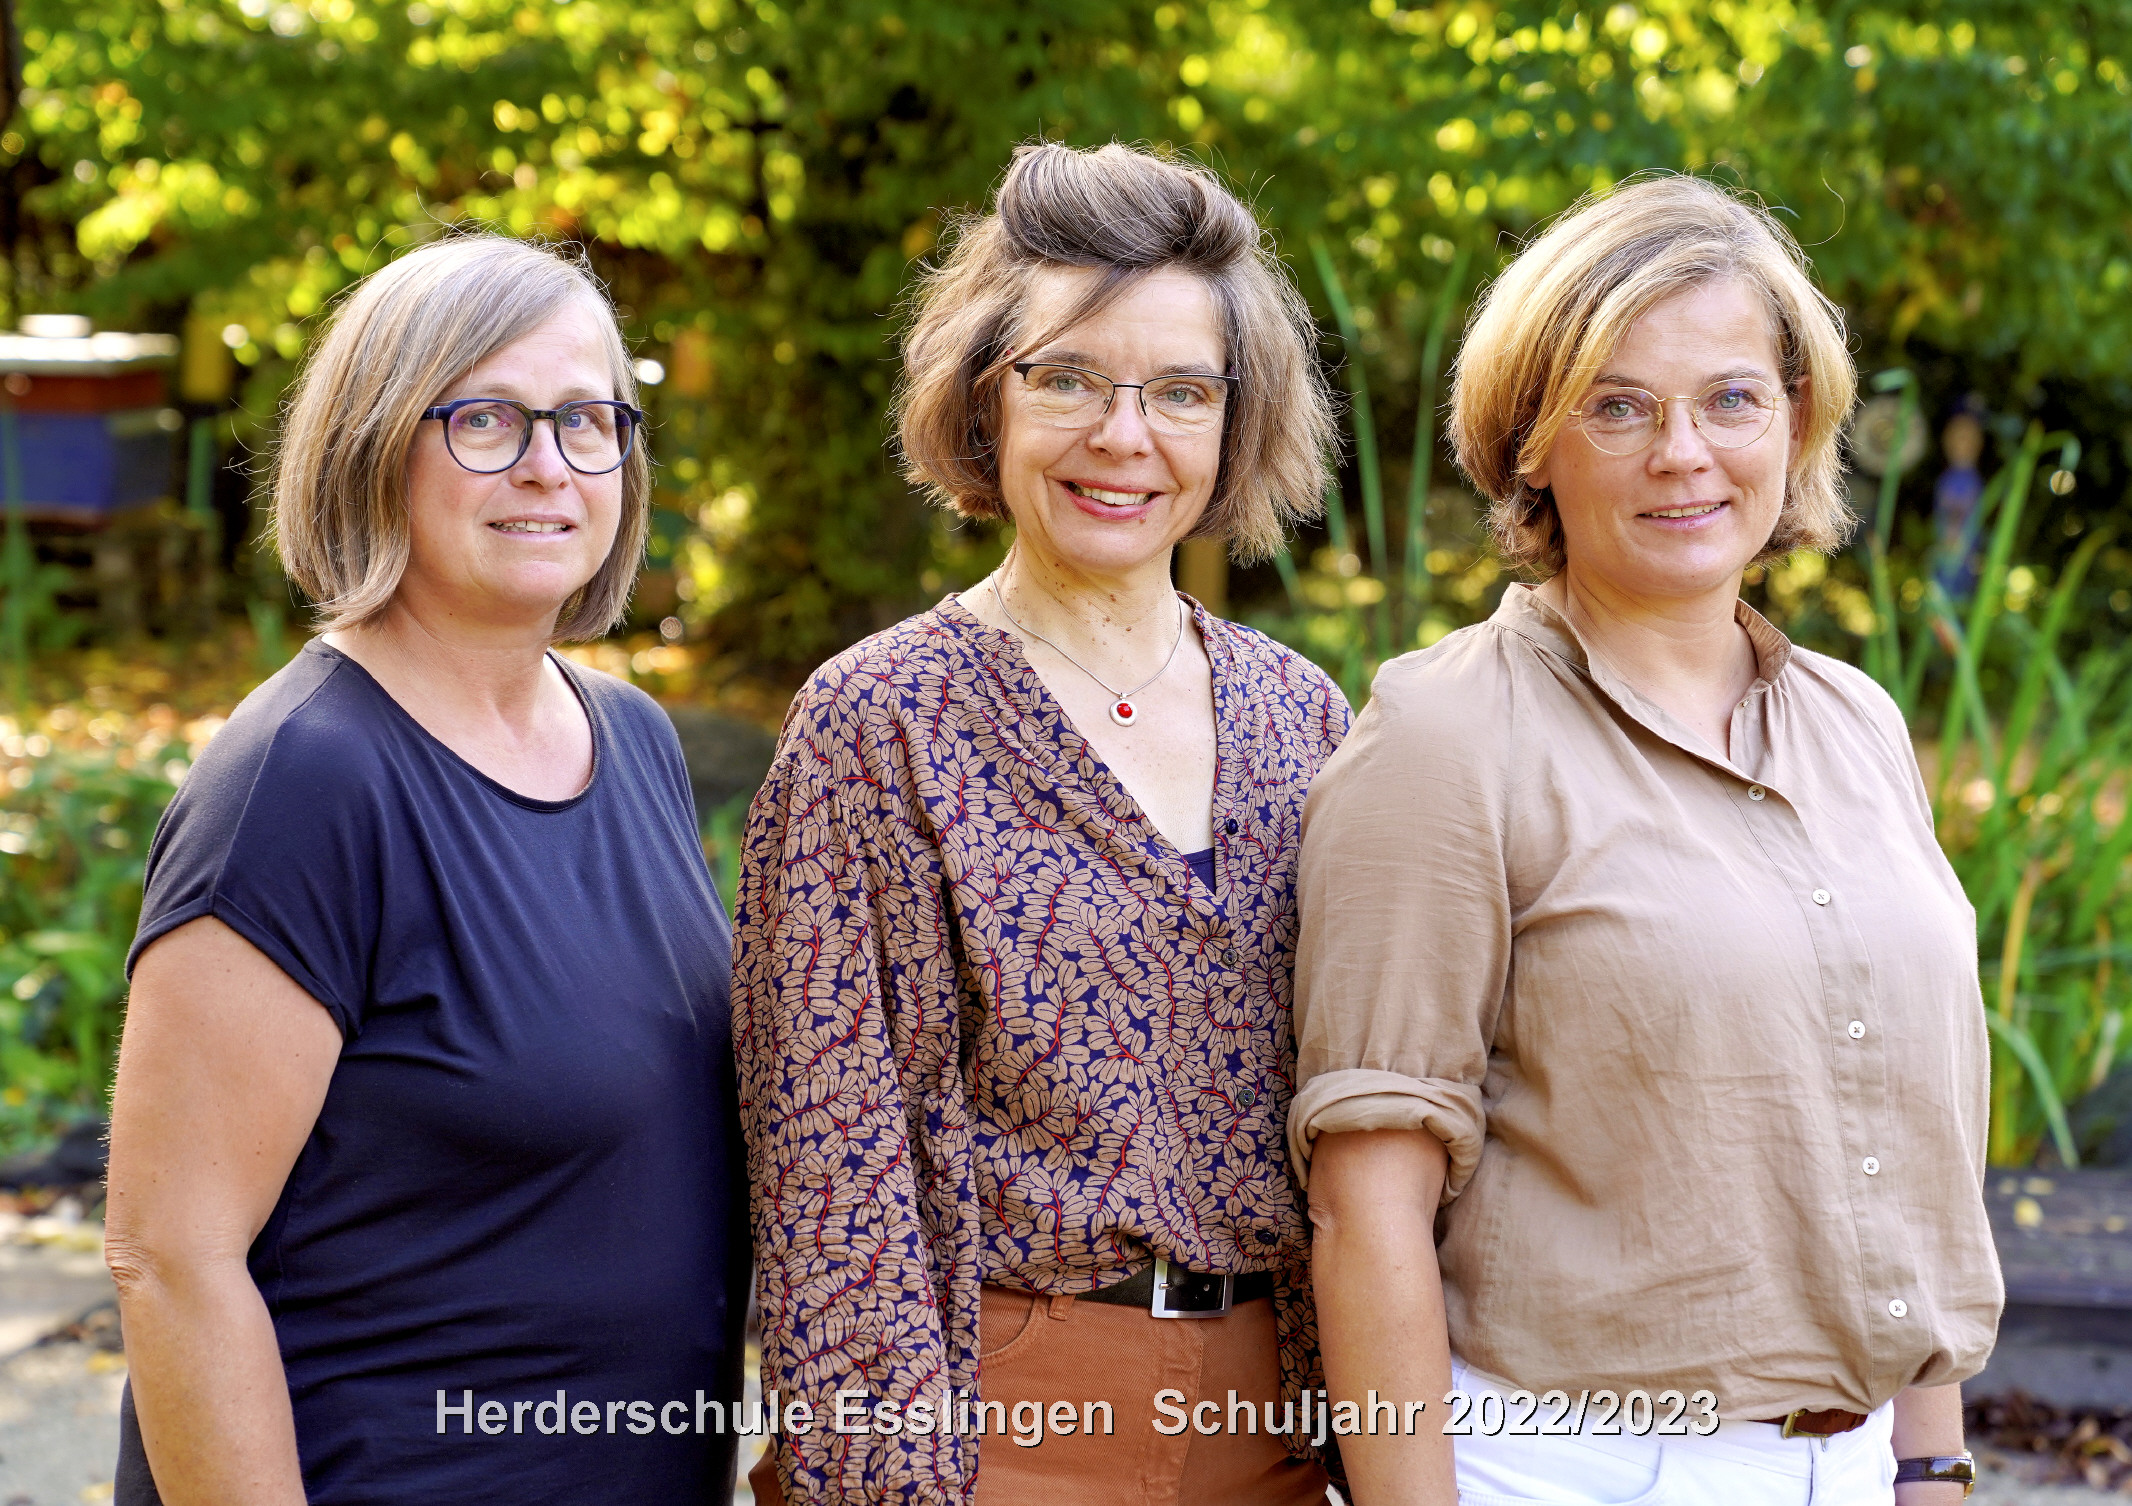 Das Schulleitunsgteam der Herderschule Esslingen 2020